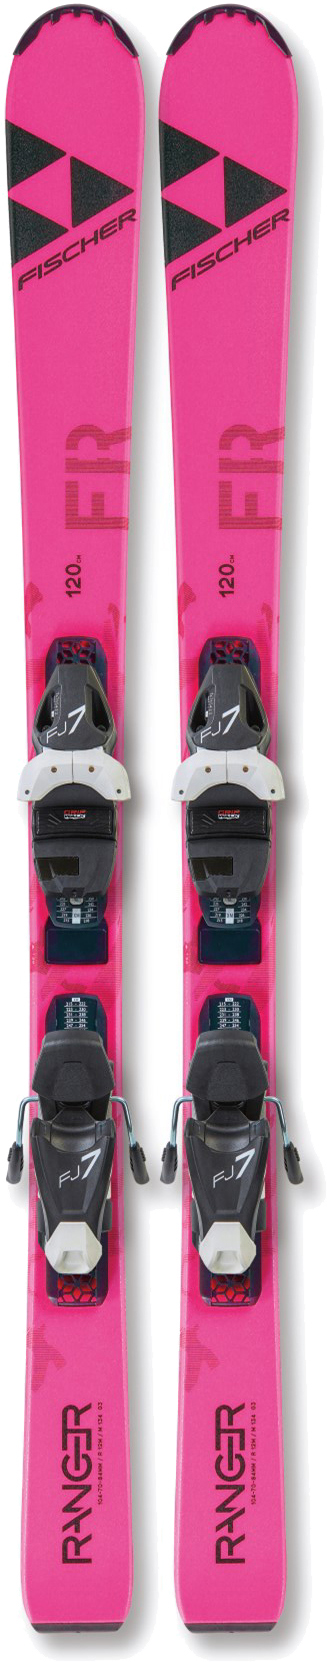 Лыжи для фрирайда Fischer Ranger Fr Jr Slr Pro 110 см